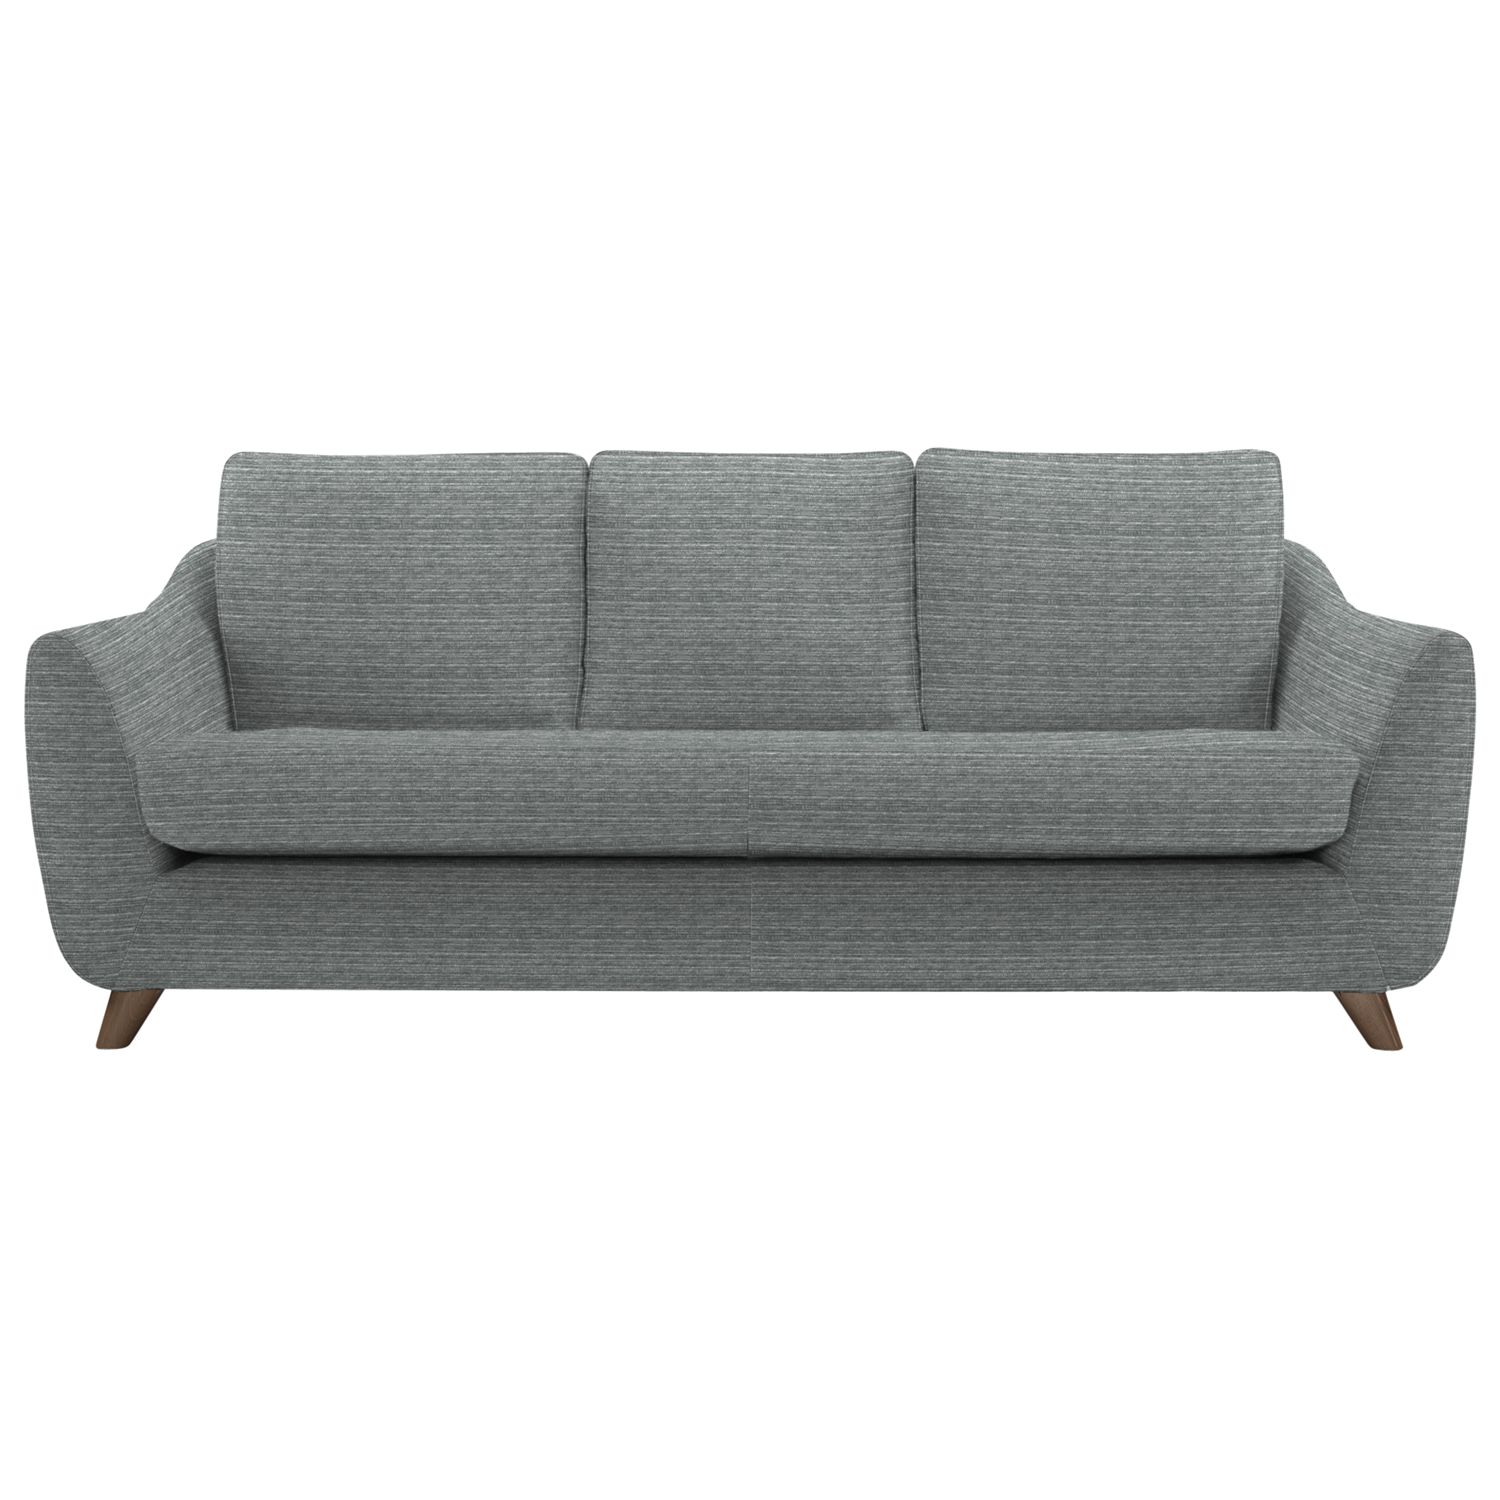 G Plan Vintage The Sixty Seven Large Sofa, Streak Grey, width 208cm